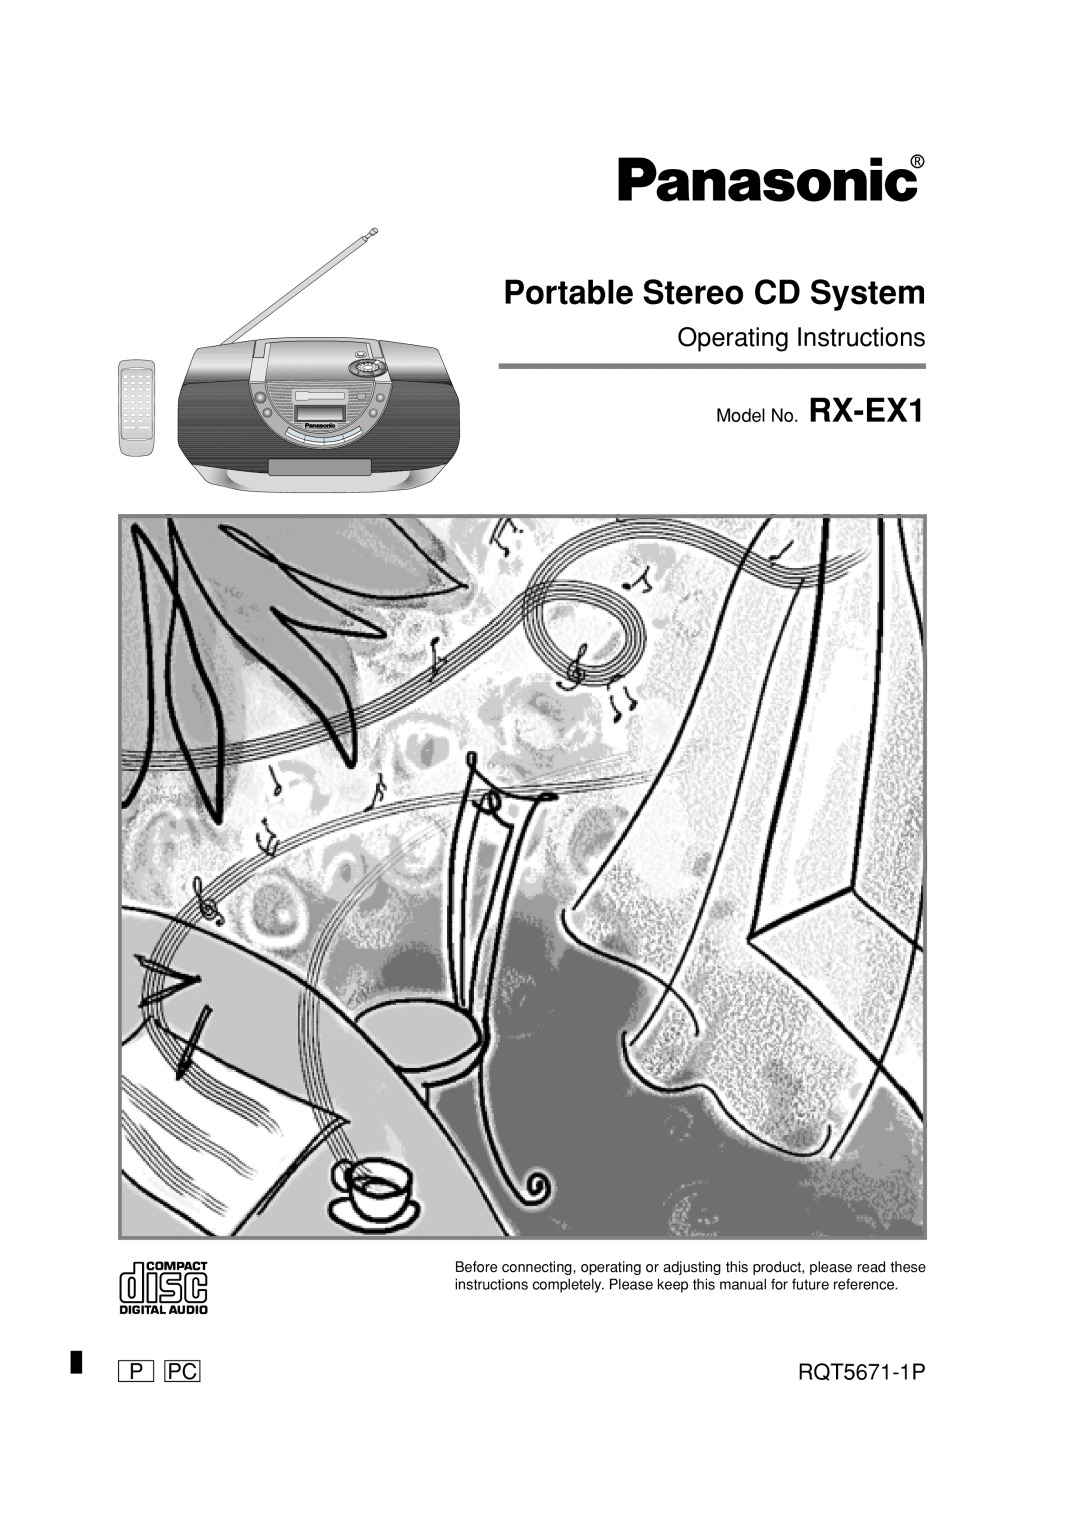 Panasonic operating instructions Model No. RX-EX1, Portable Stereo CD System, Operating Instructions, P Pc, RQT5671-1P 